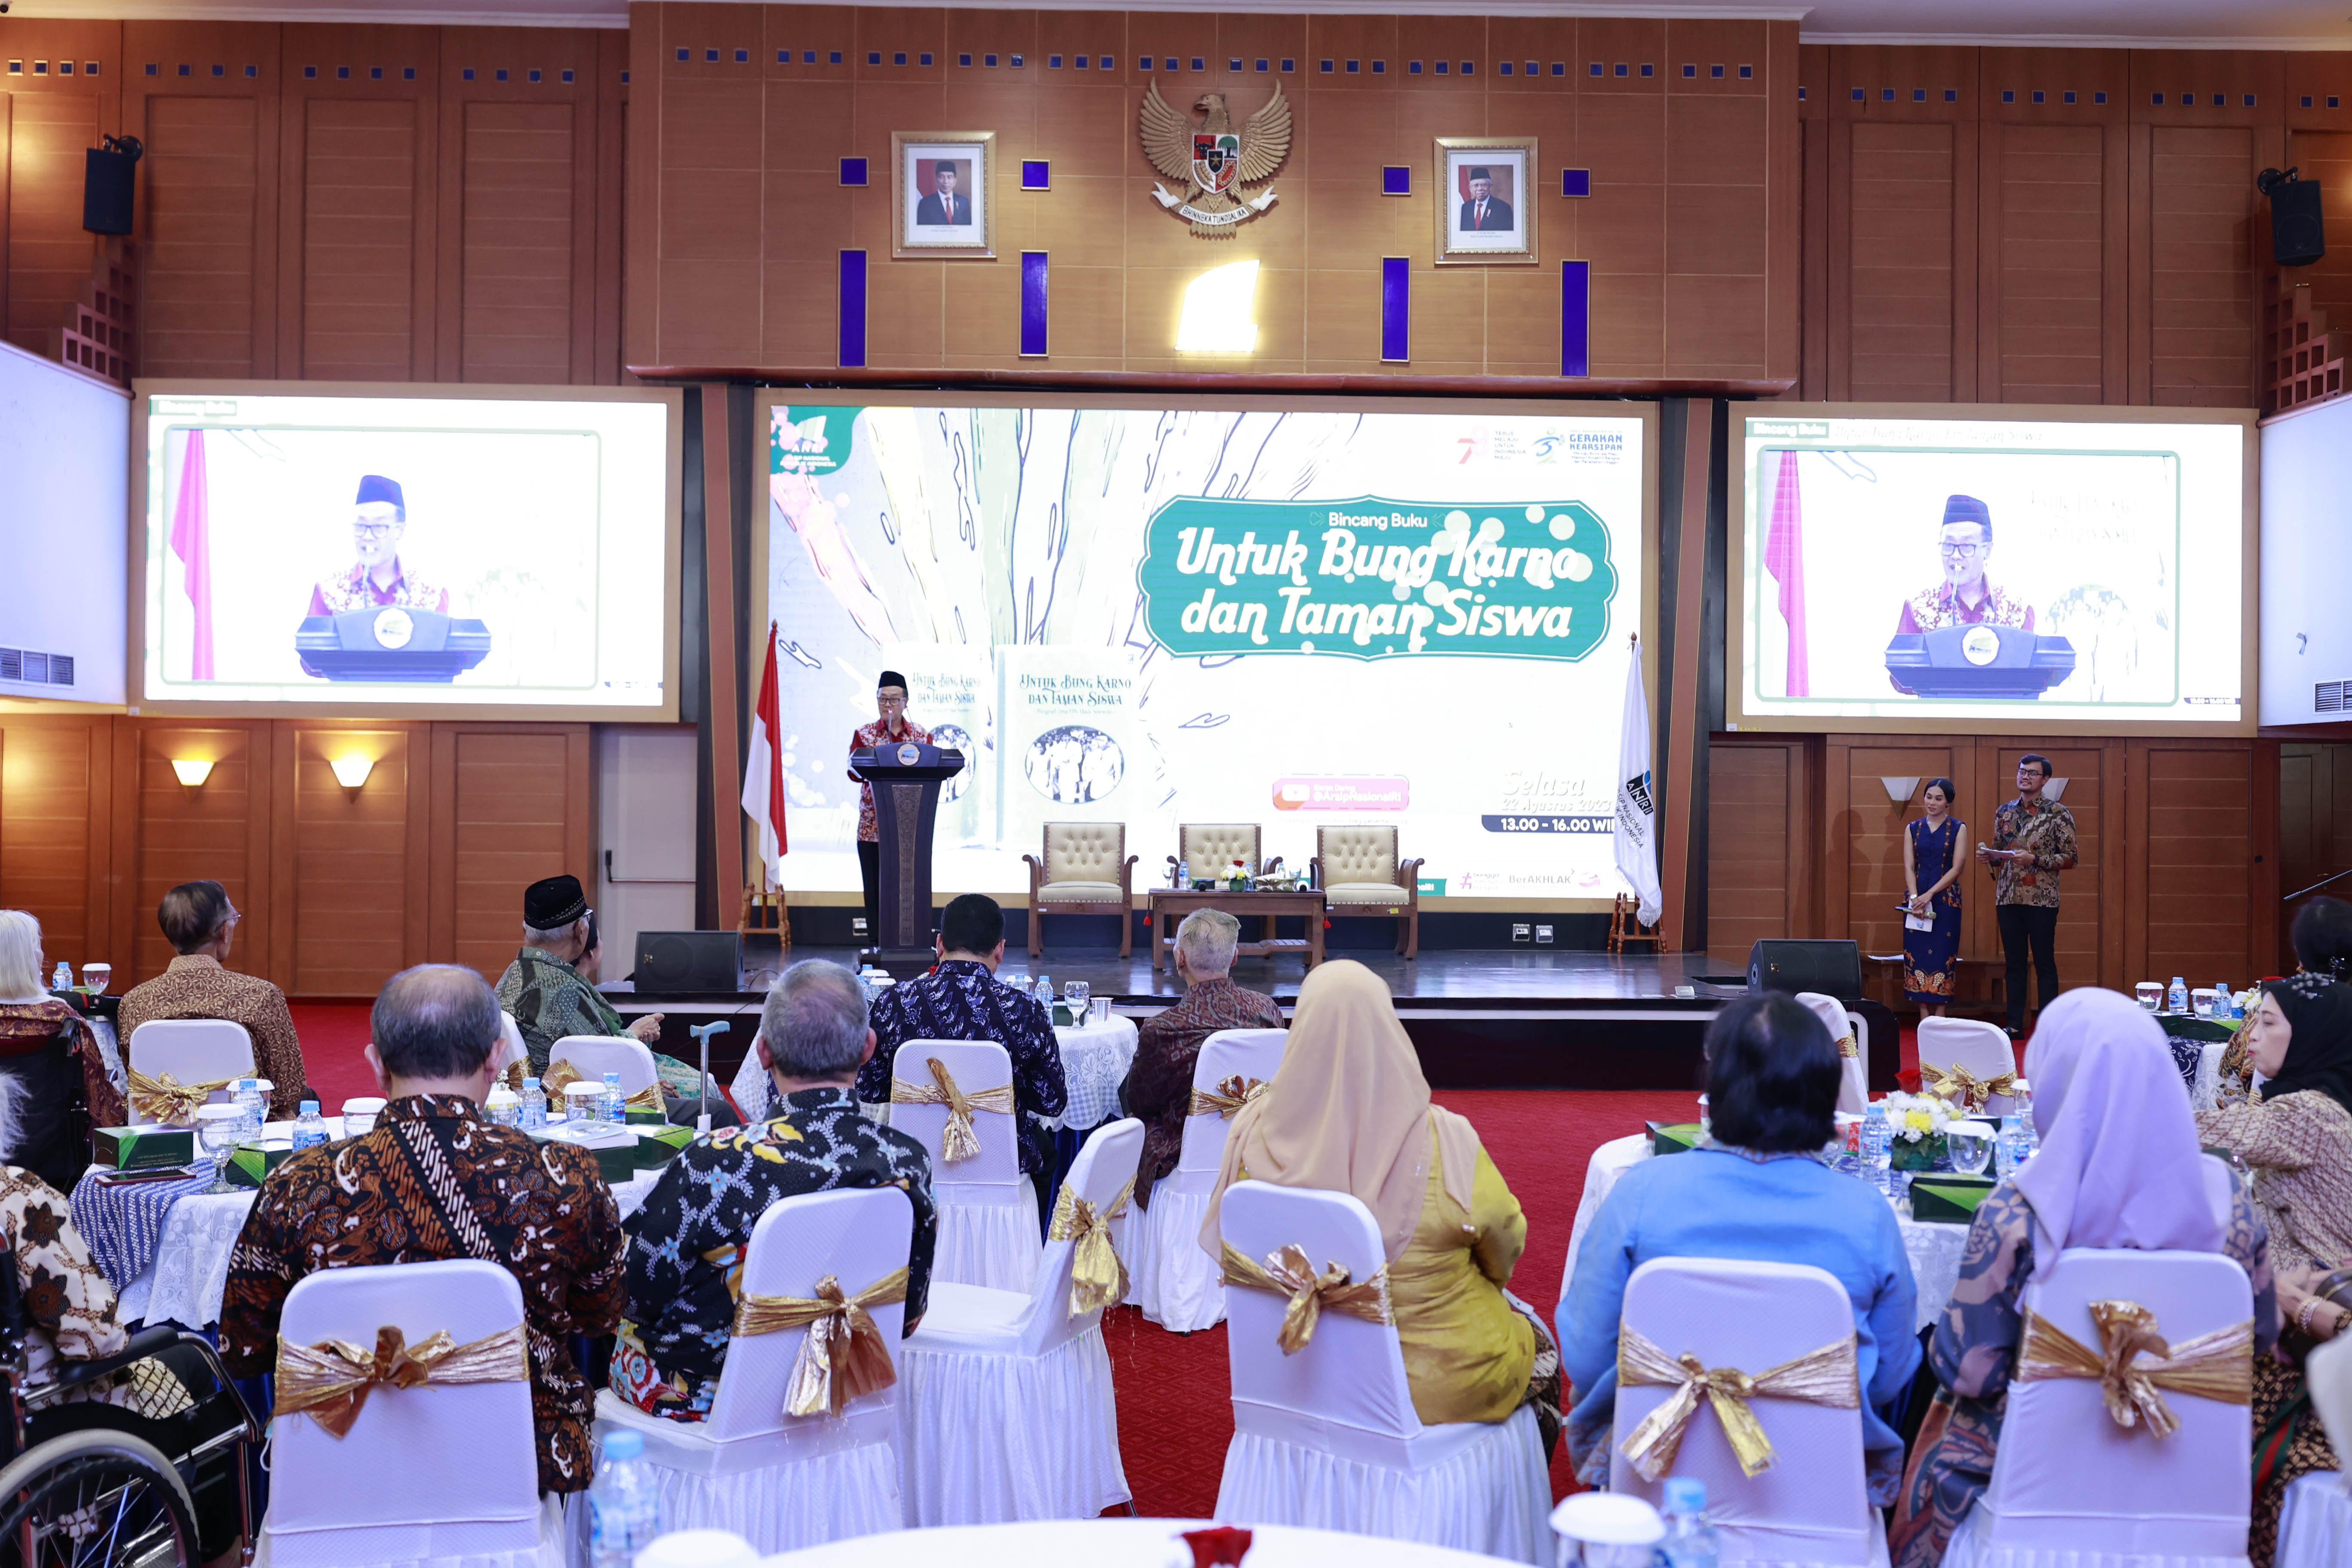 ANRI dan Penerbit KPG bekerjasama untuk menggelar Bincang Buku Untuk Bung Karno dan Taman Siswa